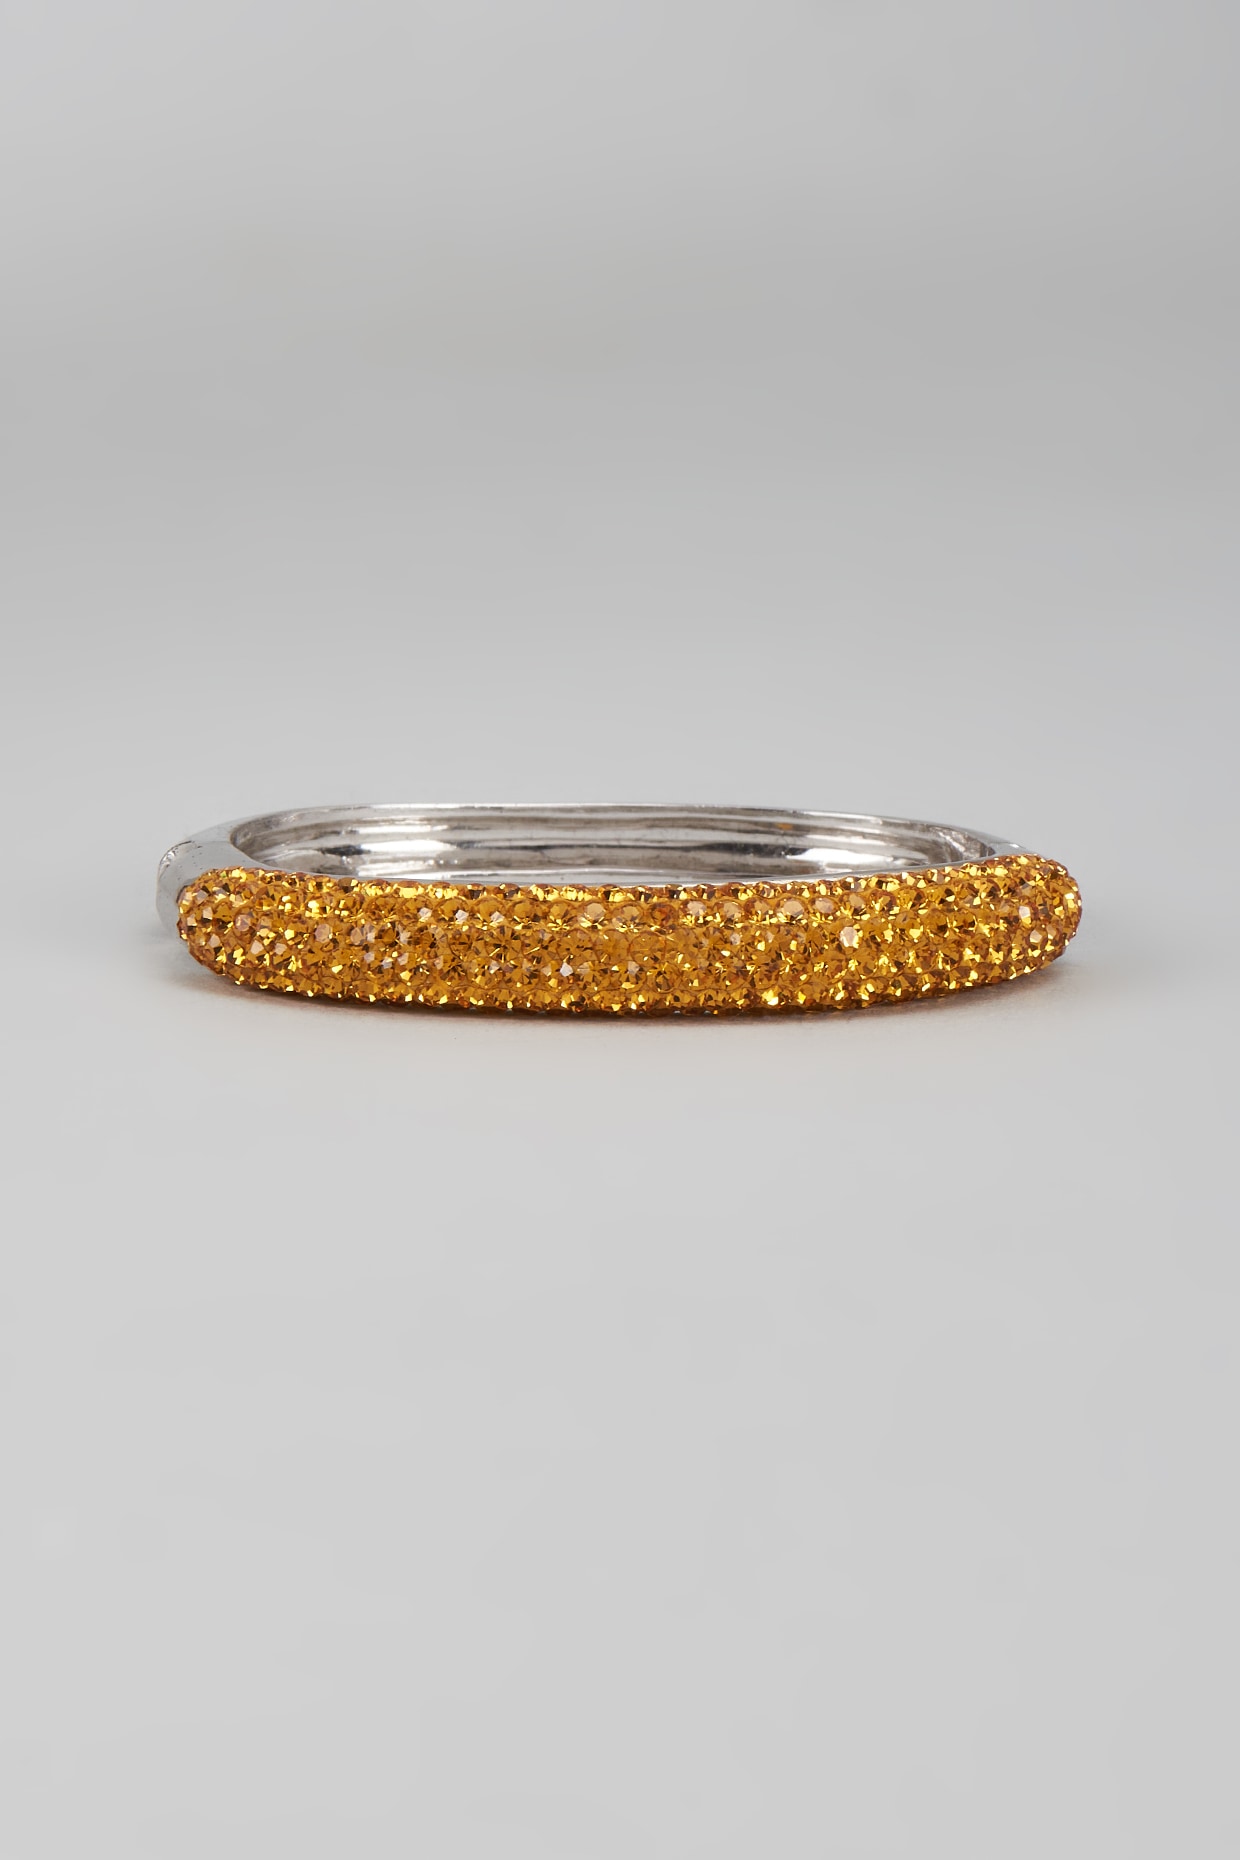 Buy Silver Brass Bracelet Online at Best Price at Global Desi- 8905724153549